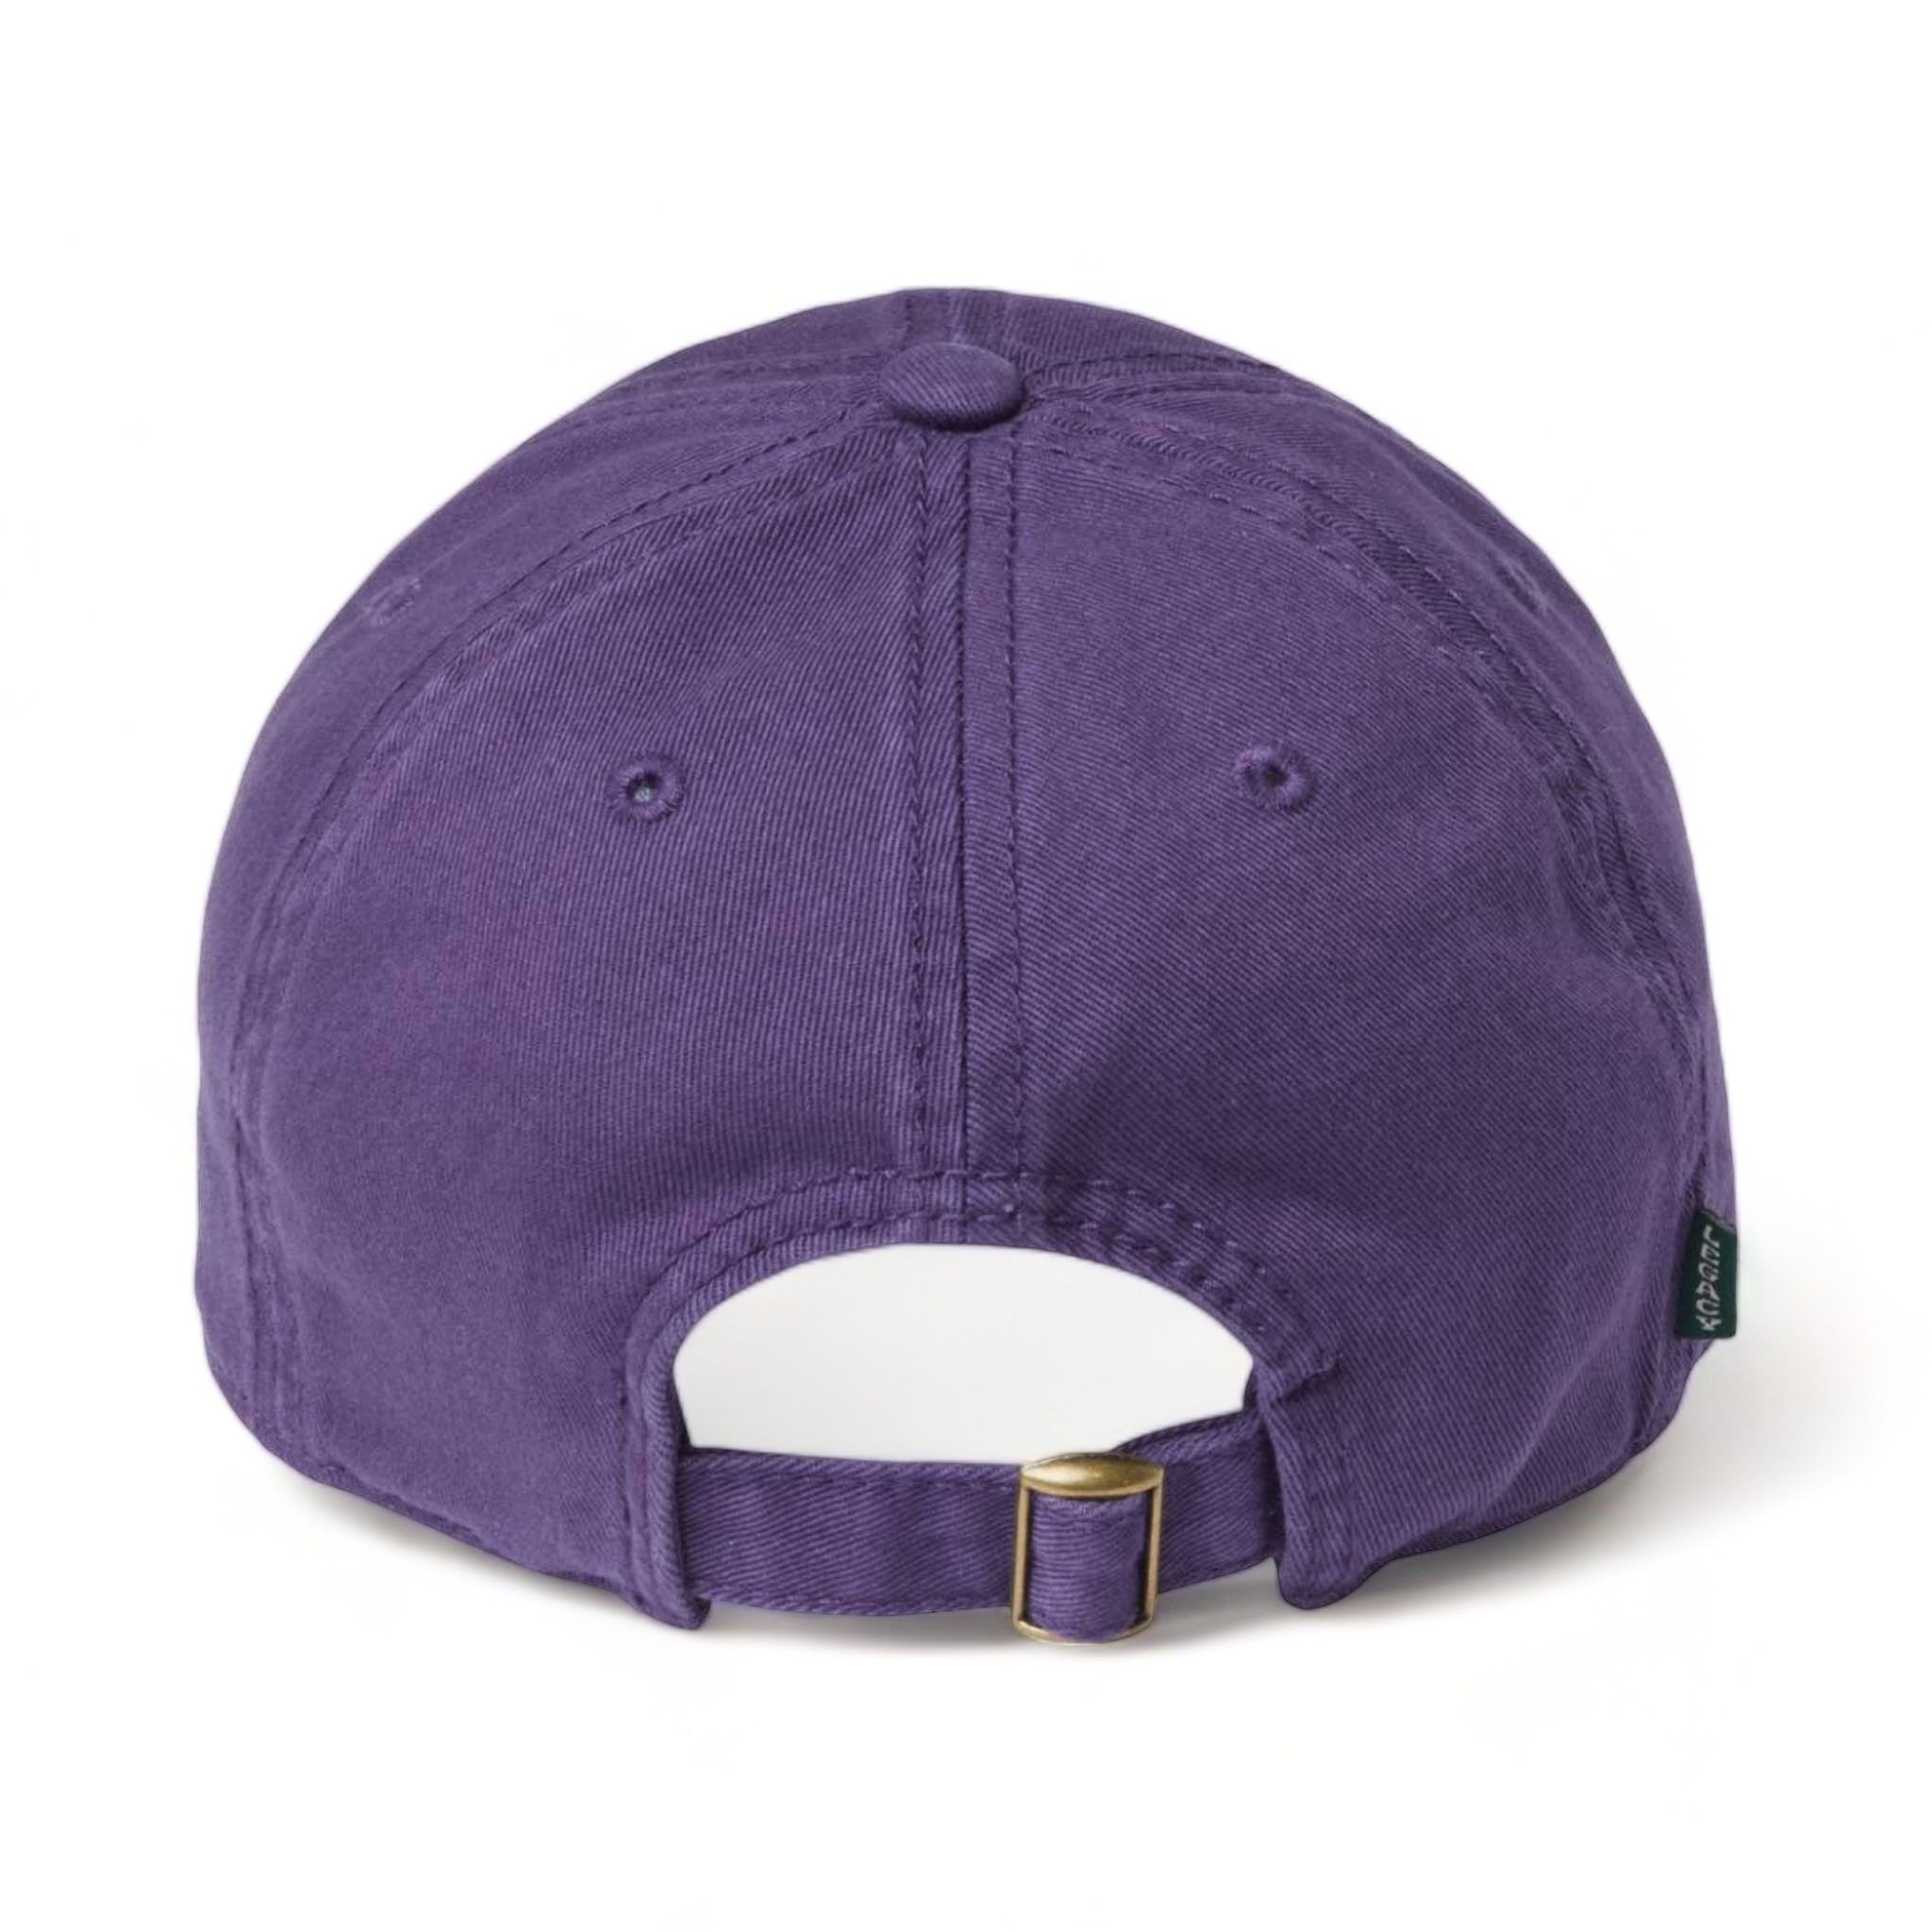 Back view of LEGACY EZA custom hat in purple